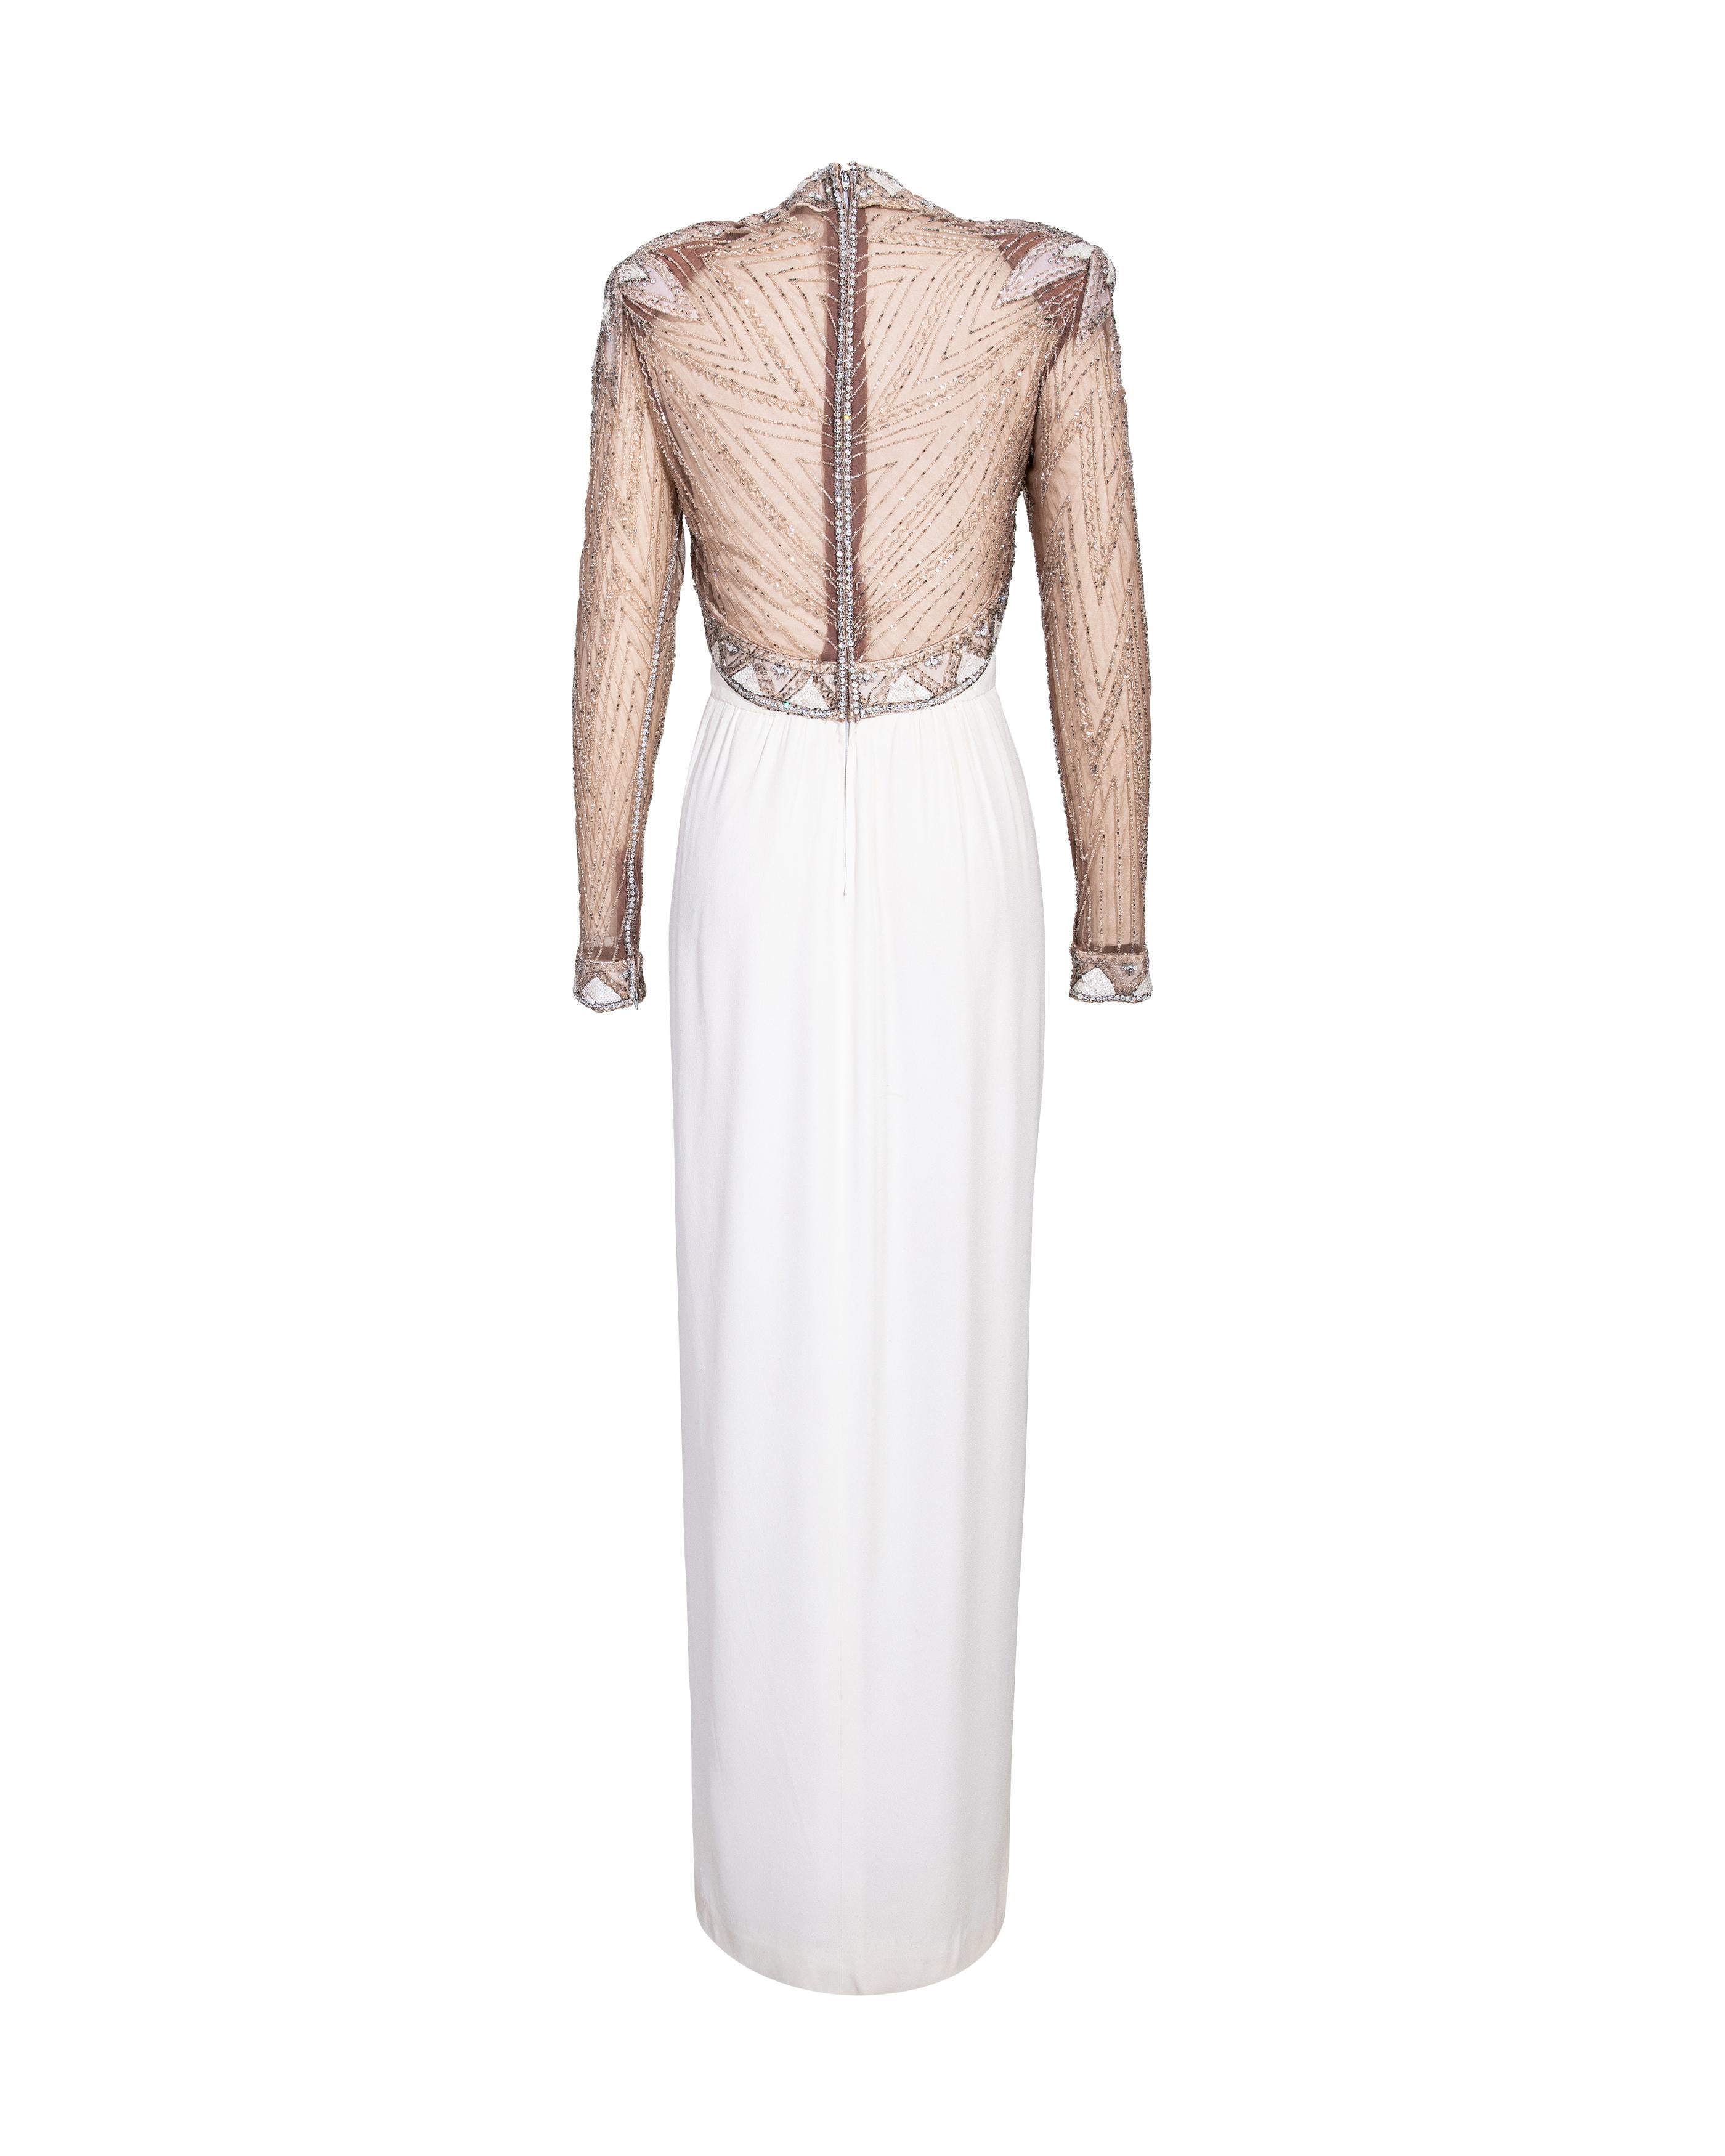 Women's 1980's Bob Mackie Semi-Sheer White Embellished Gown